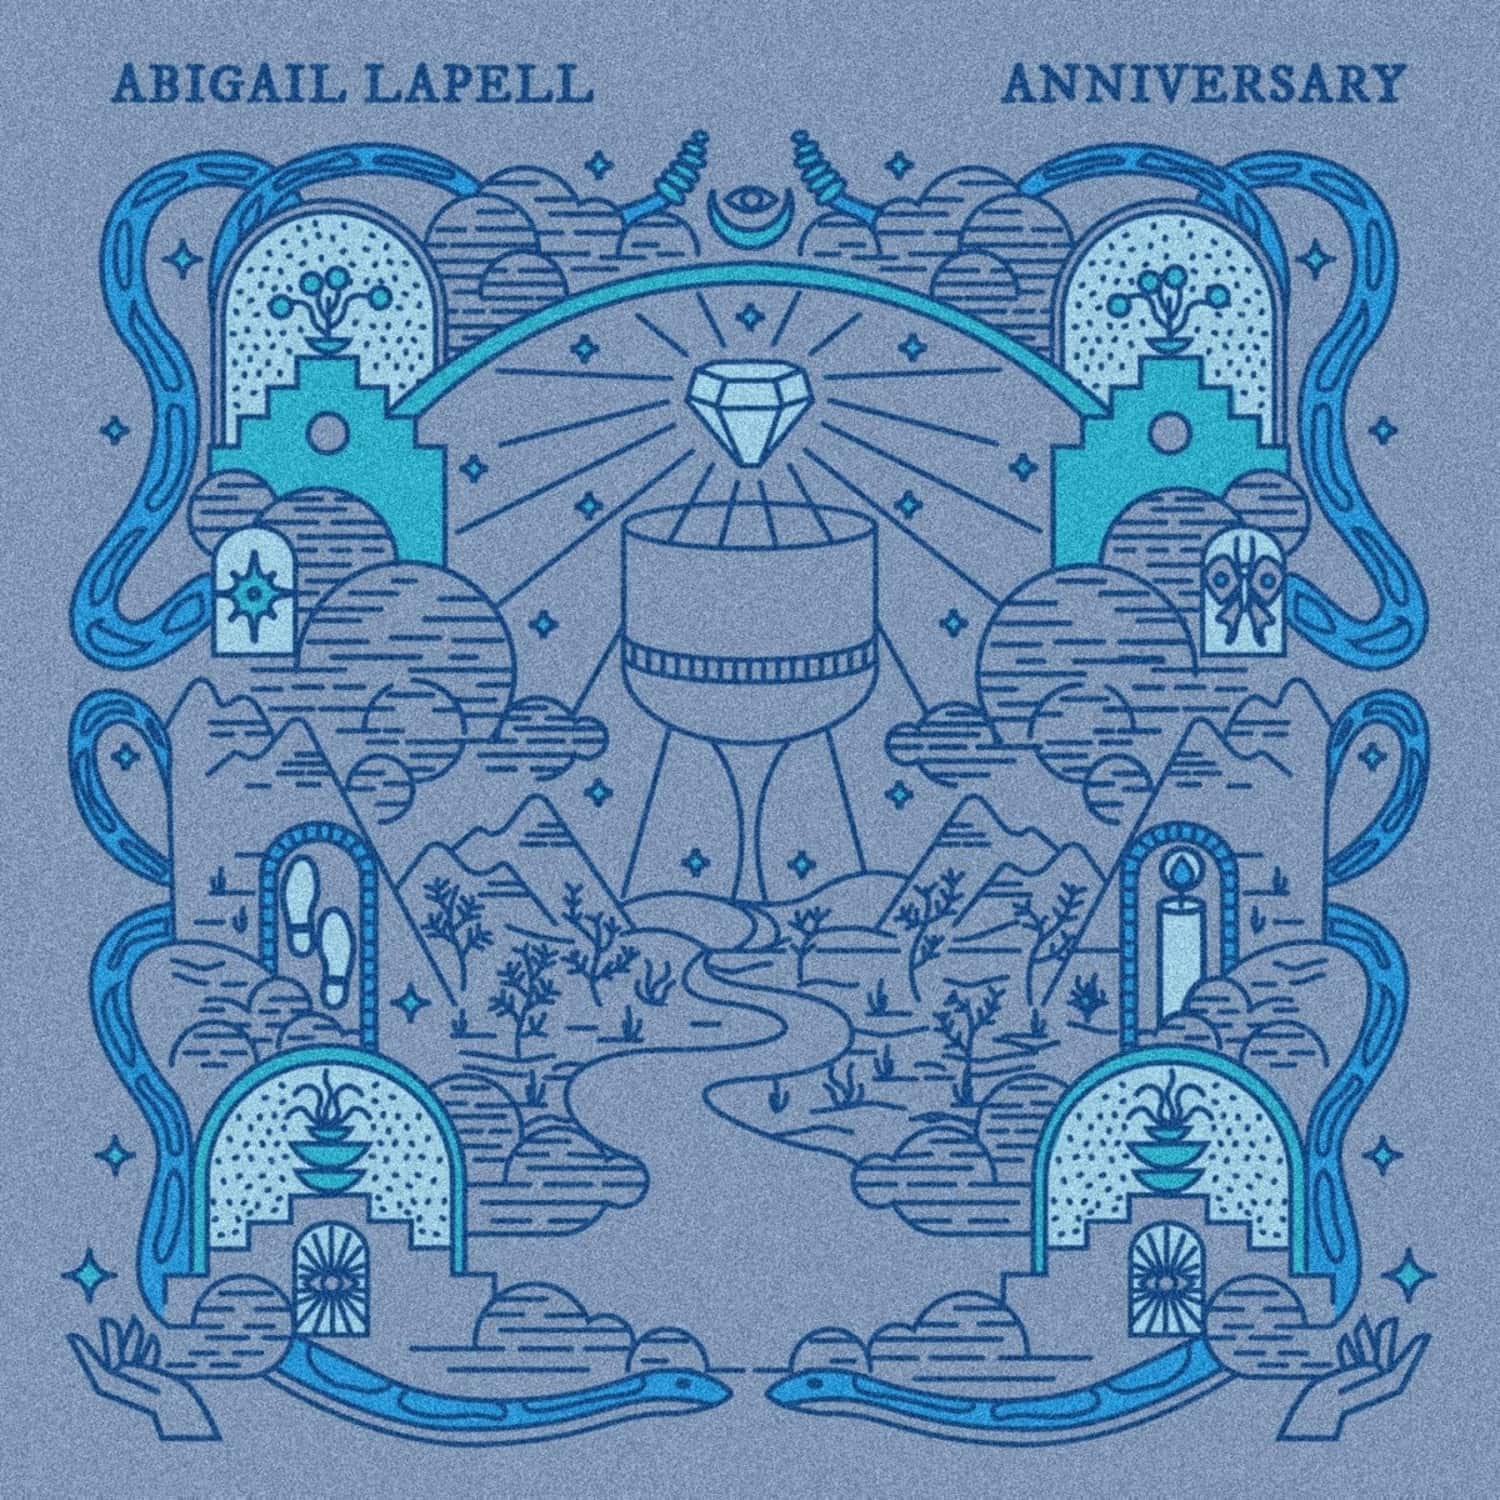 Abigail Lapell - ANNIVERSARY 